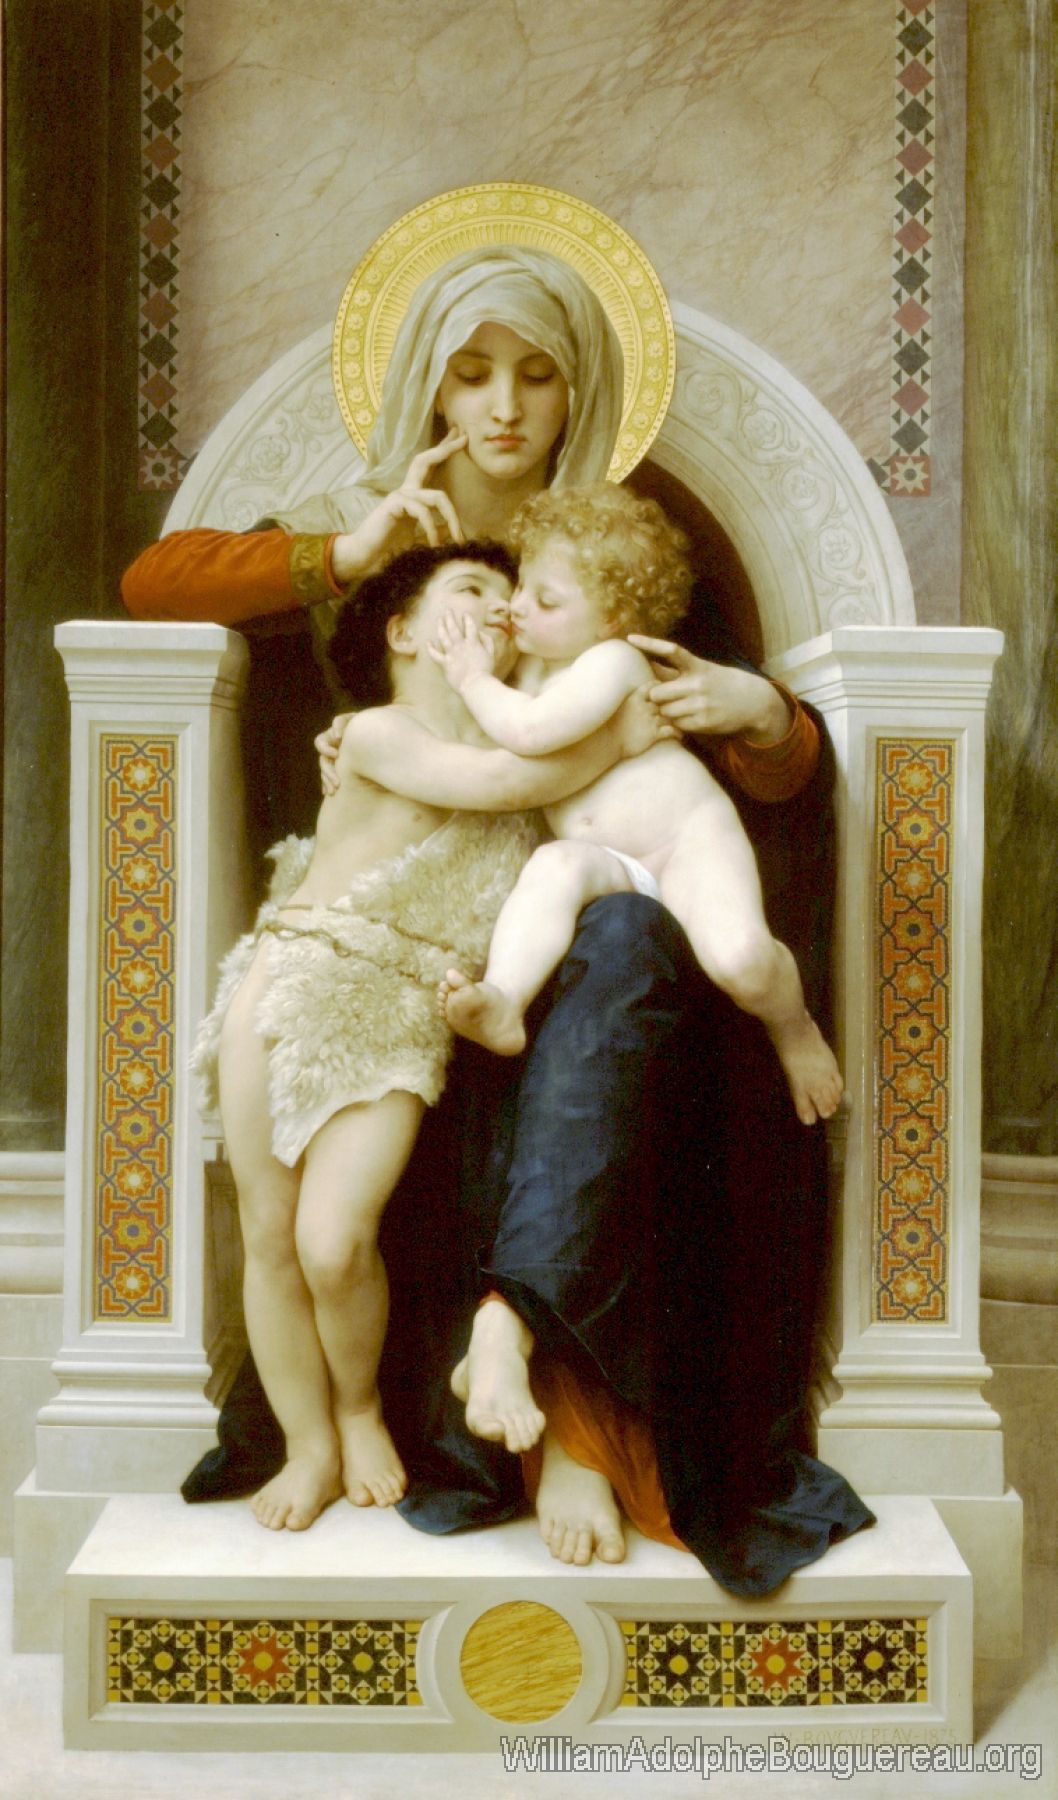 The Virgin, the Baby Jesus and Saint John the Baptist